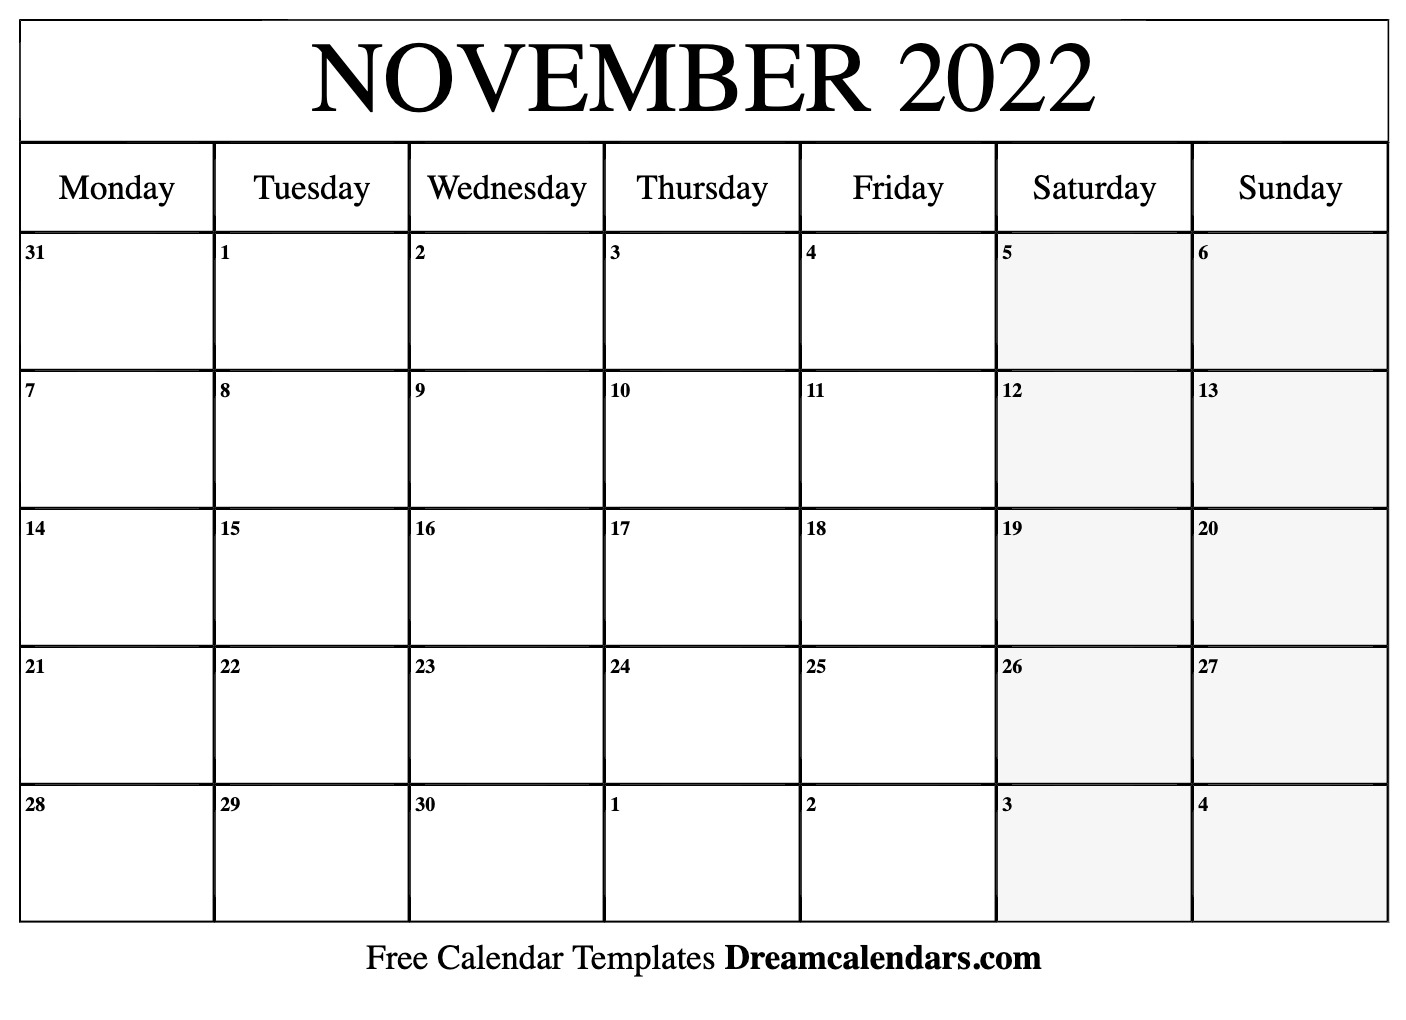 Monthly Calendar 2022 November Download Printable November 2022 Calendars